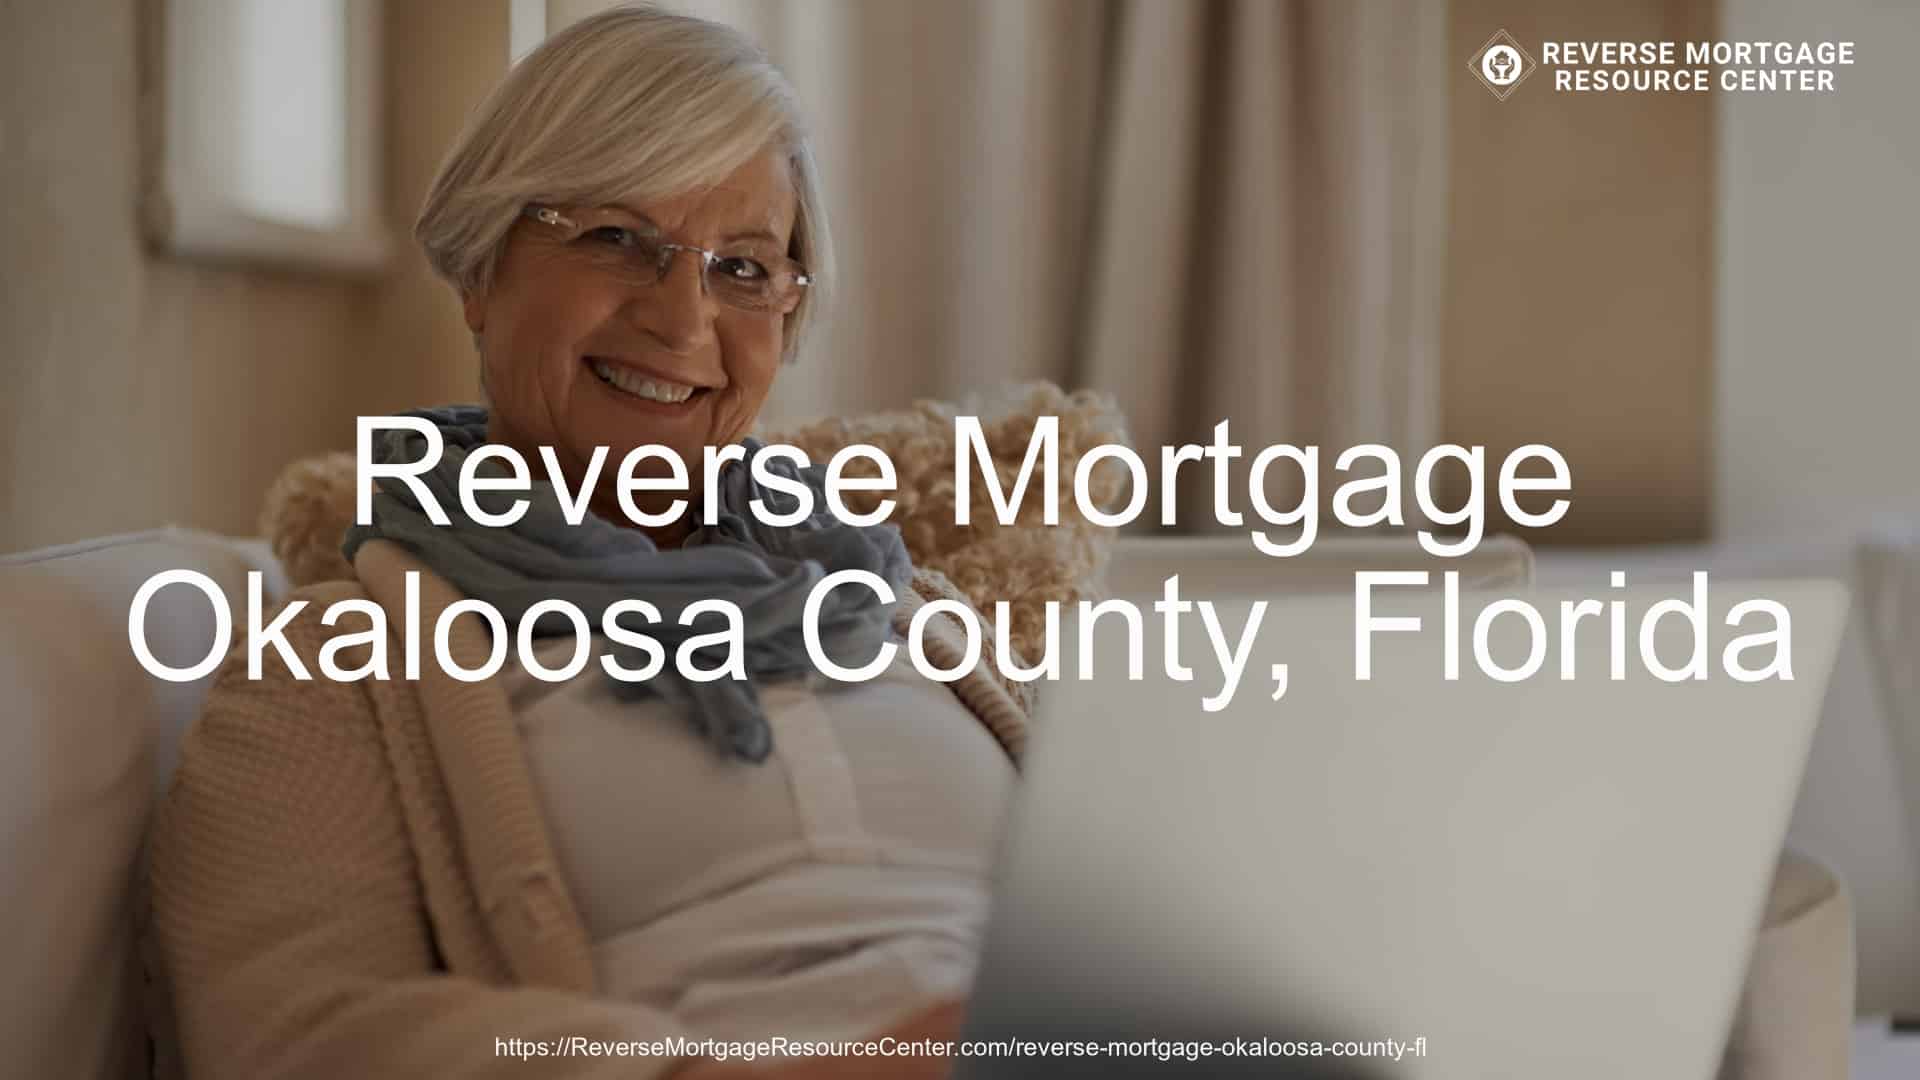 Reverse Mortgage Loans in Okaloosa County Florida